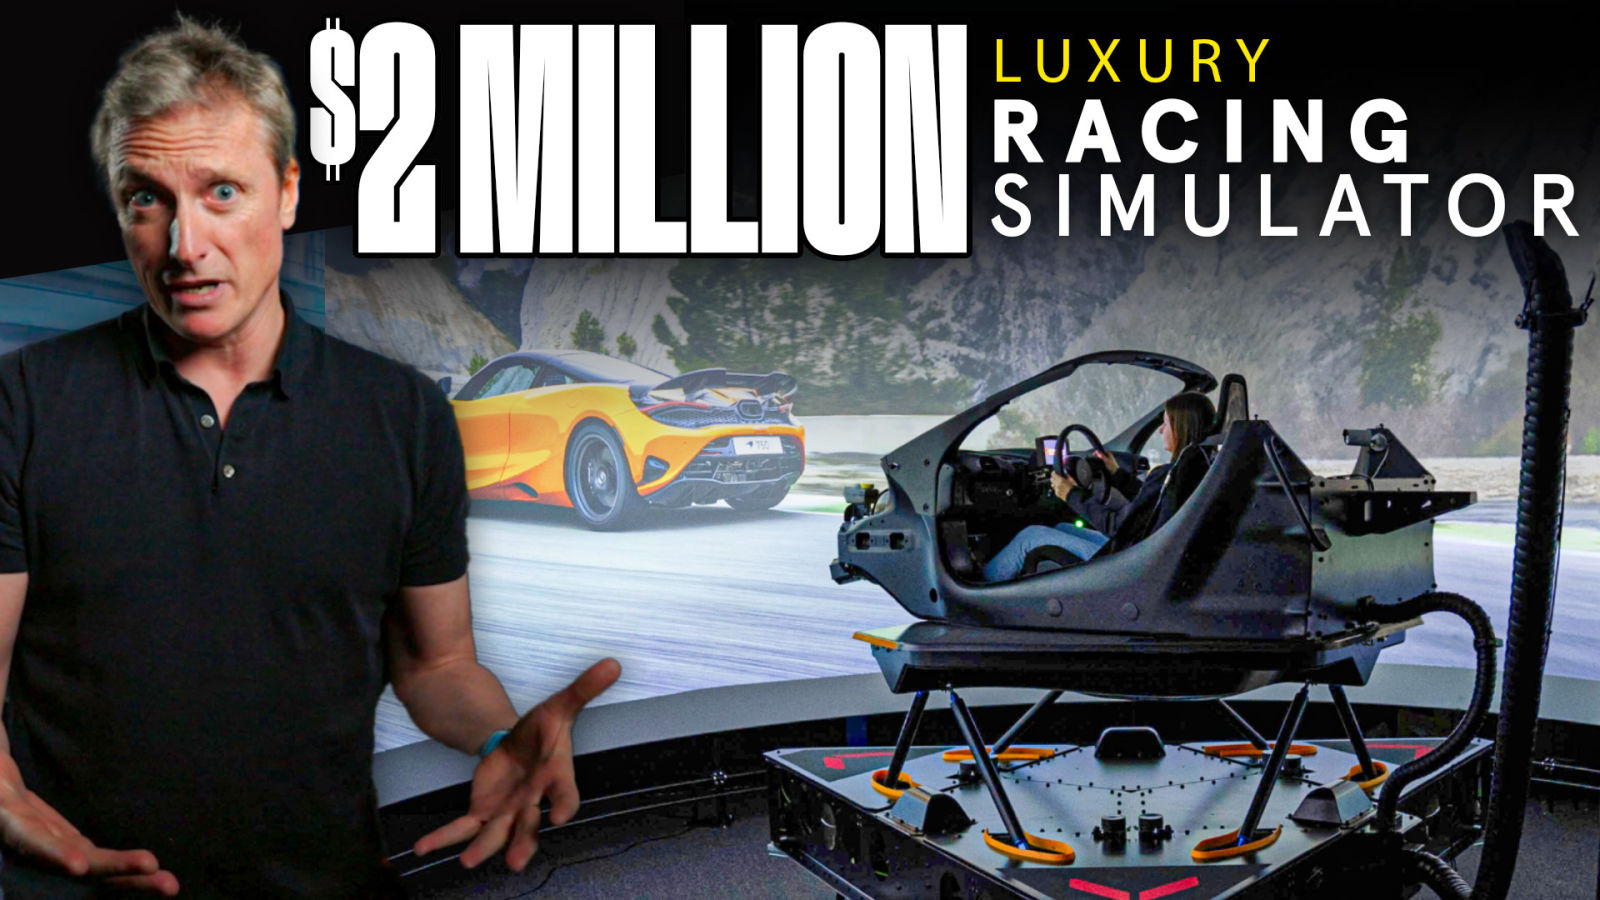 $2M vs. $63,000: Luxury Racing Simulators